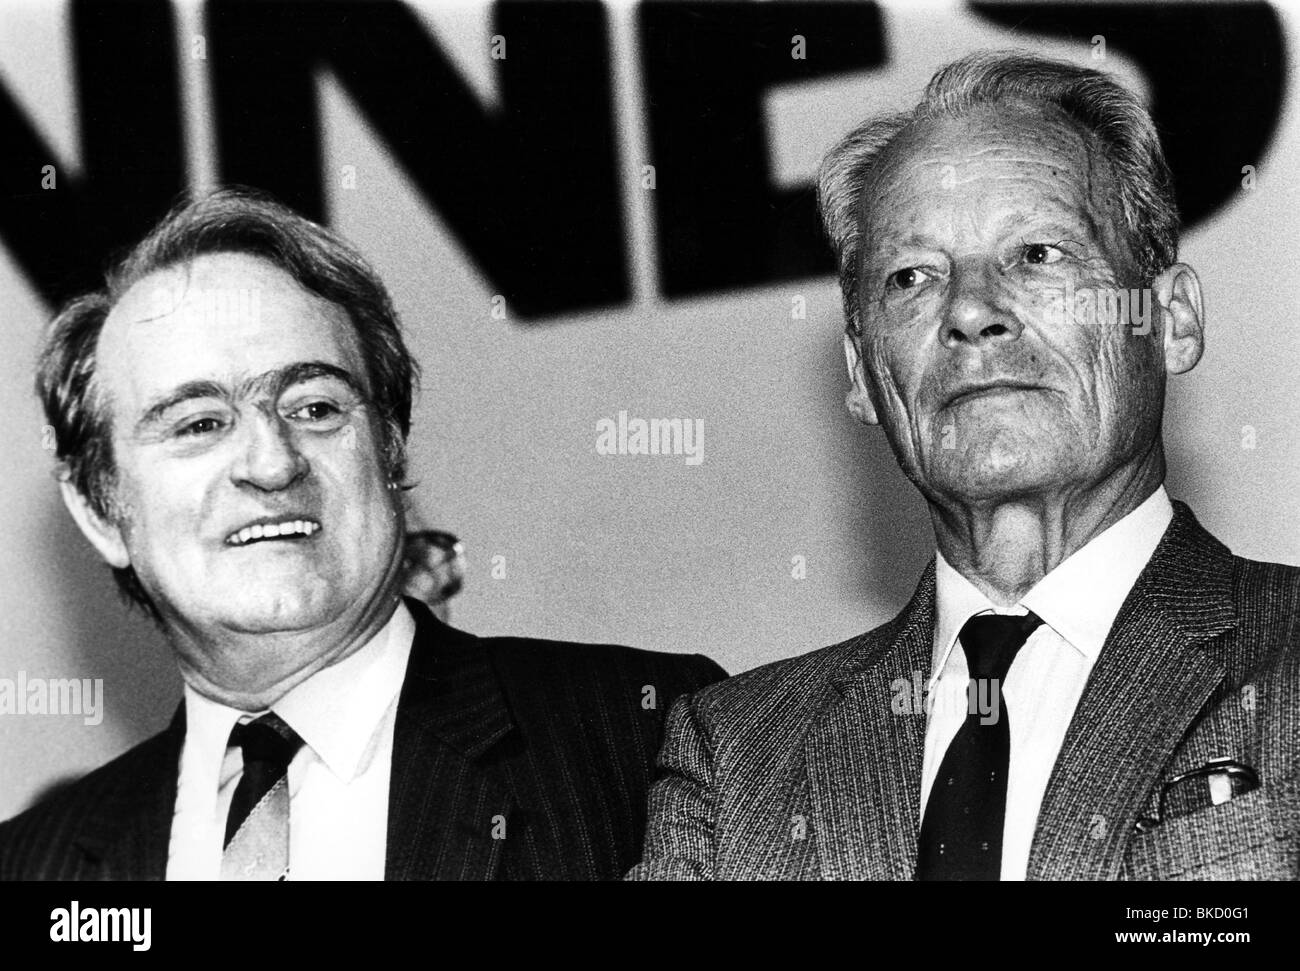 Rau, Johannes, 16.1.1931 - 27.1.2006, German politician (SPD), portrait, with Willy Brandt, party meeting of the North Rhine-Westphalian SPD, Dortmund, Germany, 13.4.1985, Stock Photo